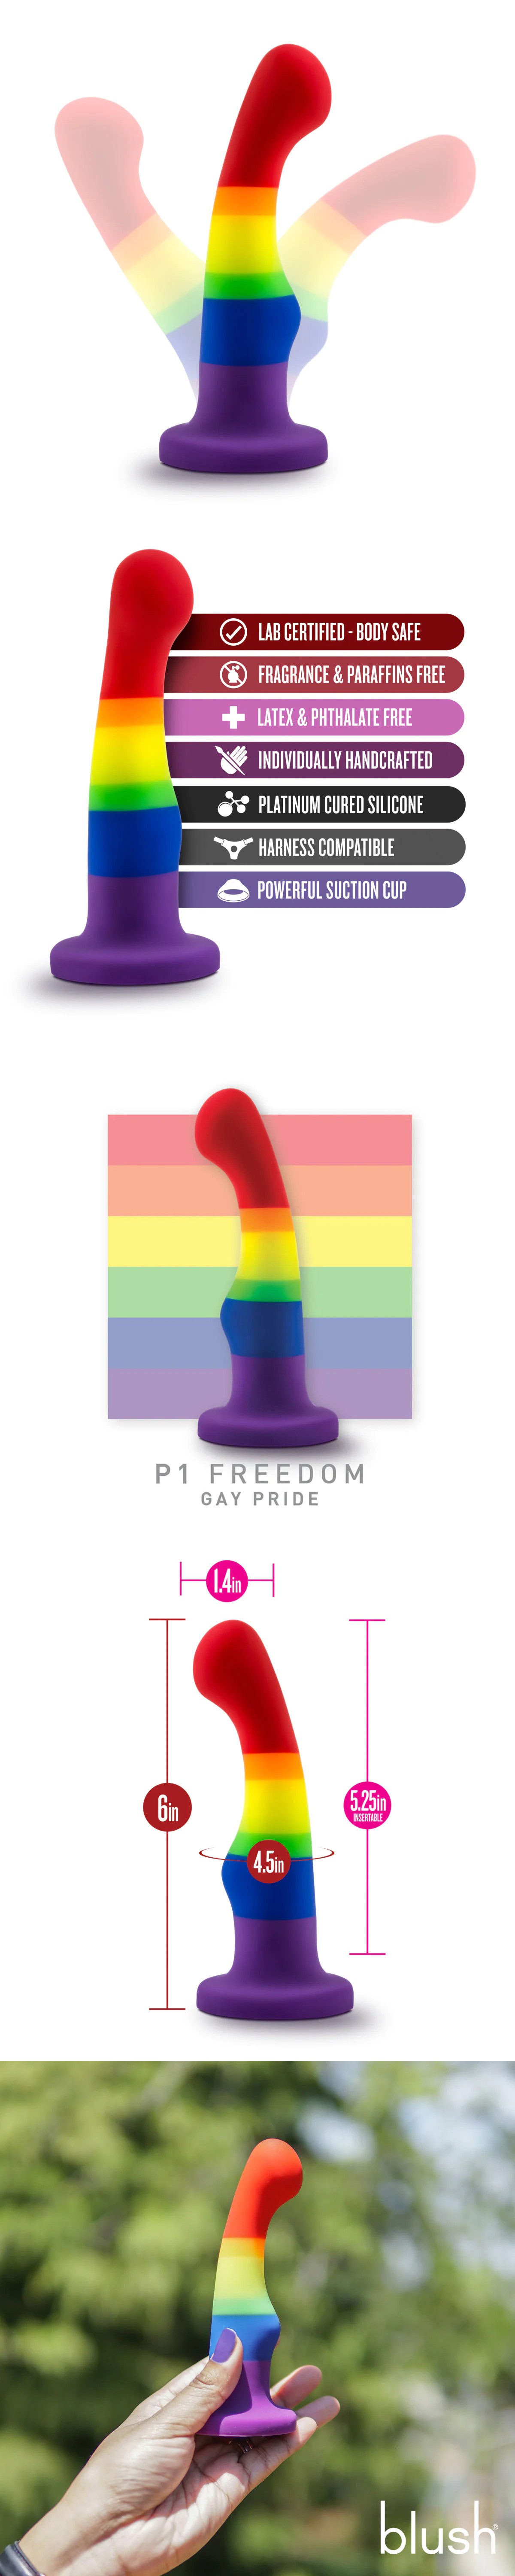 Blush Avant Pride Freedom P1 Artisan 6 Inch Curved Silicone Dildo